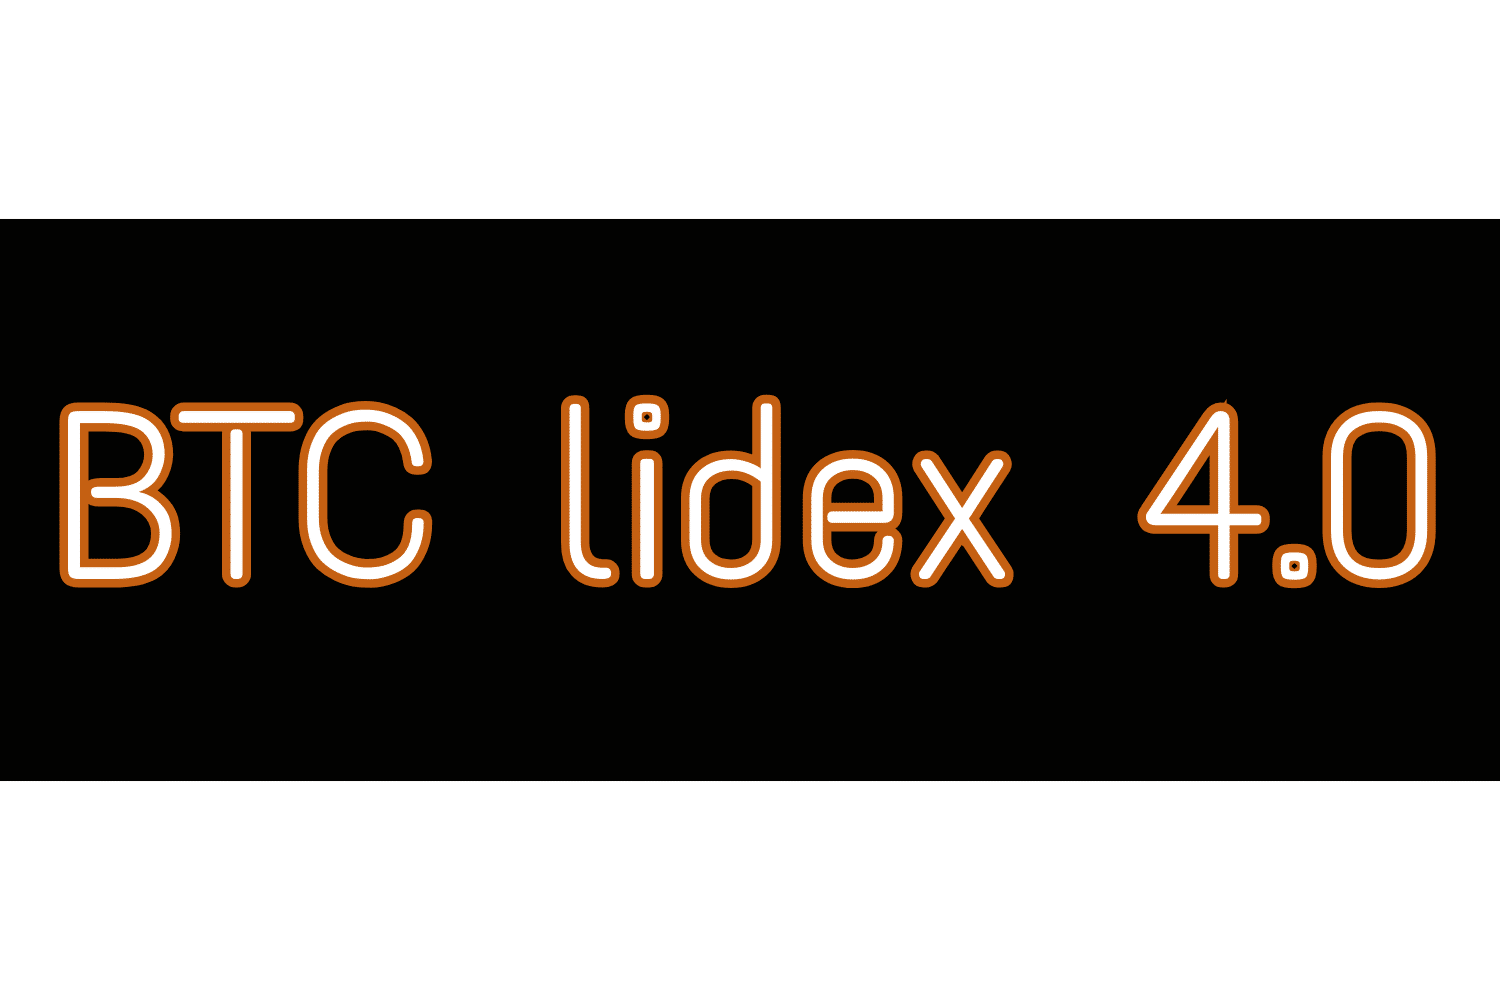 Registrazione Lidex 4.0 Bit